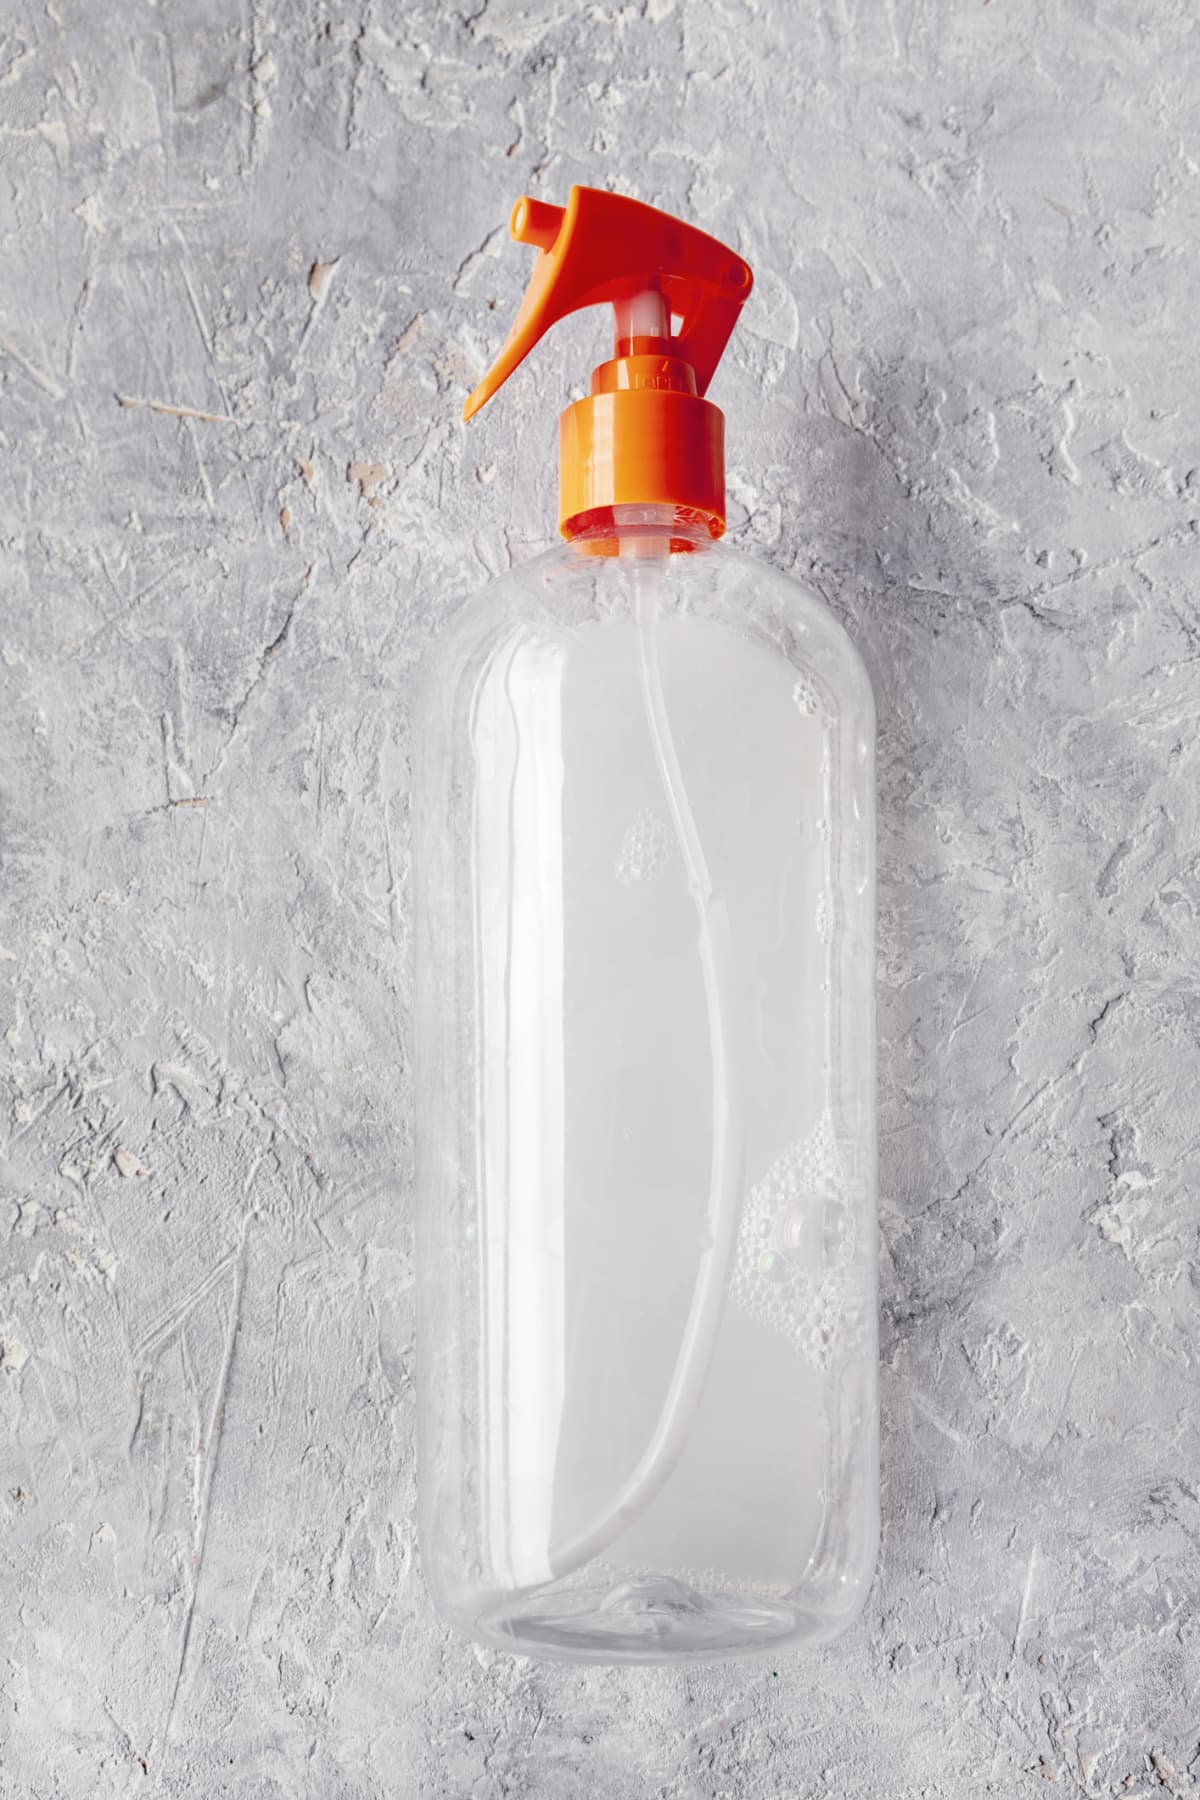 A bottle of cleaning vinegar